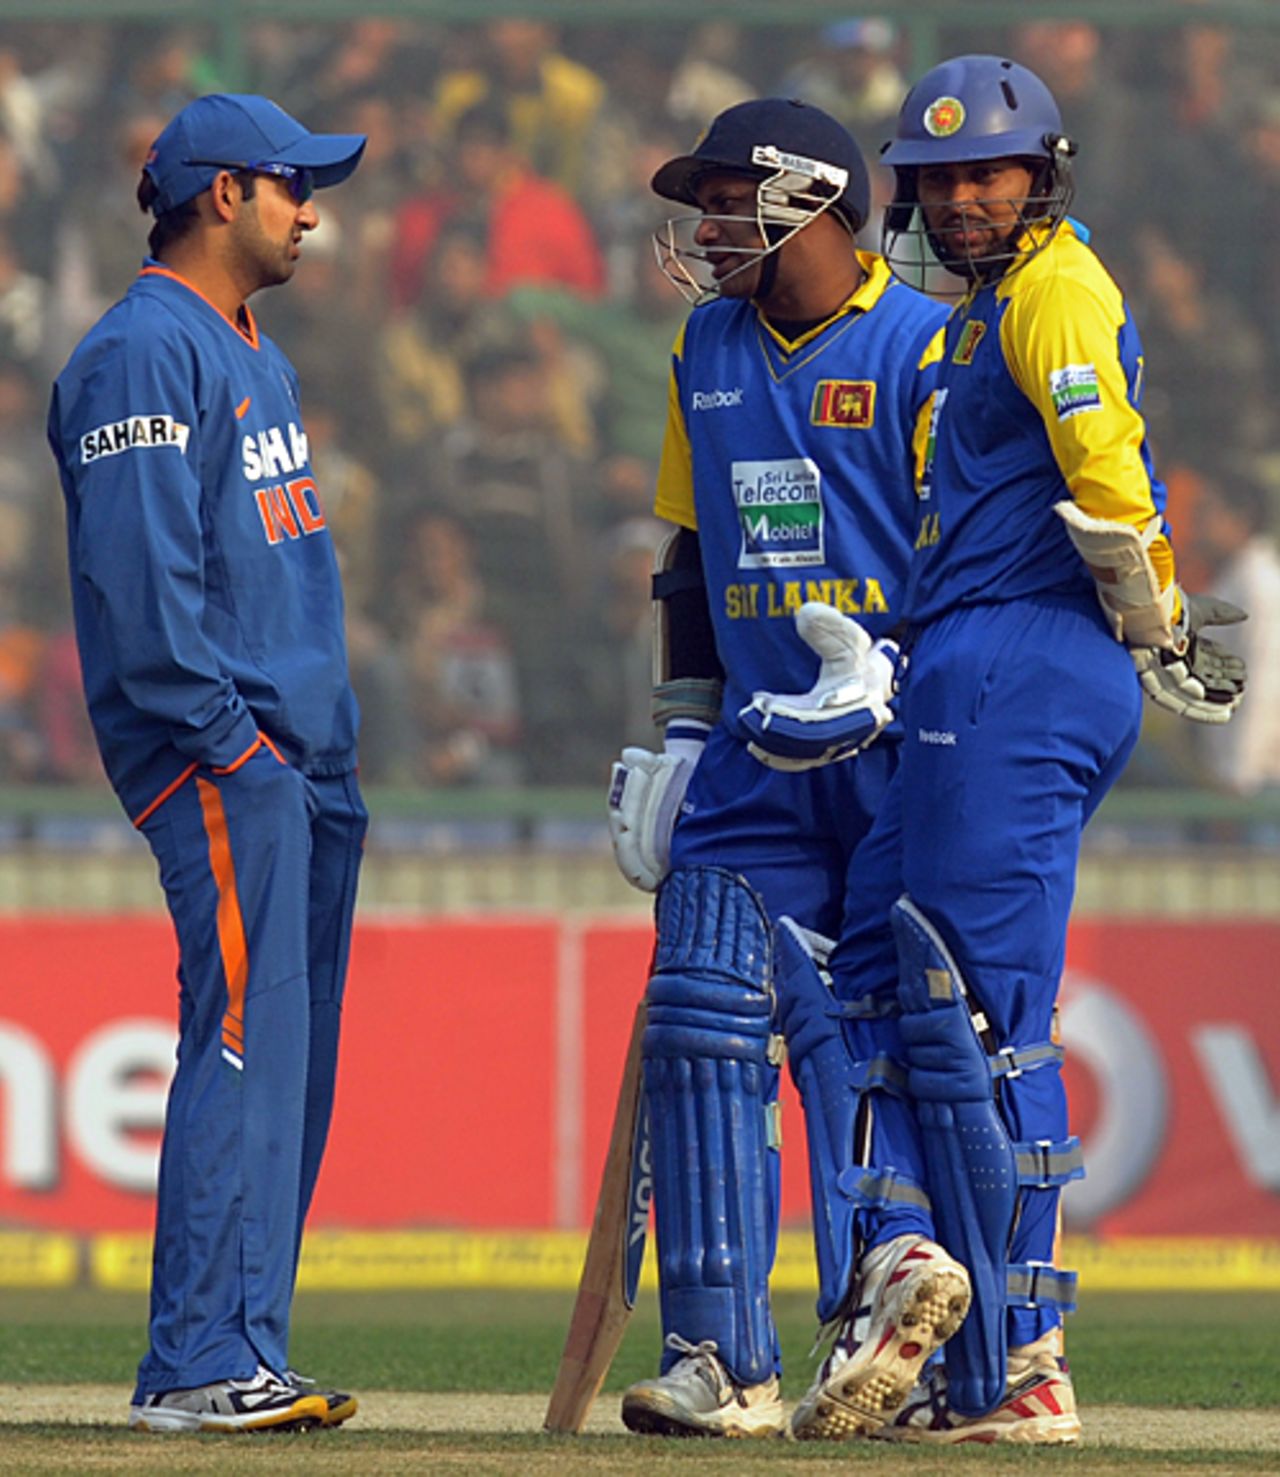 Tillakaratne Dilshan and Sanath Jayasuriya express concern with Gautam Gambhir, India v Sri Lanka, 5th ODI, December 27, 2009